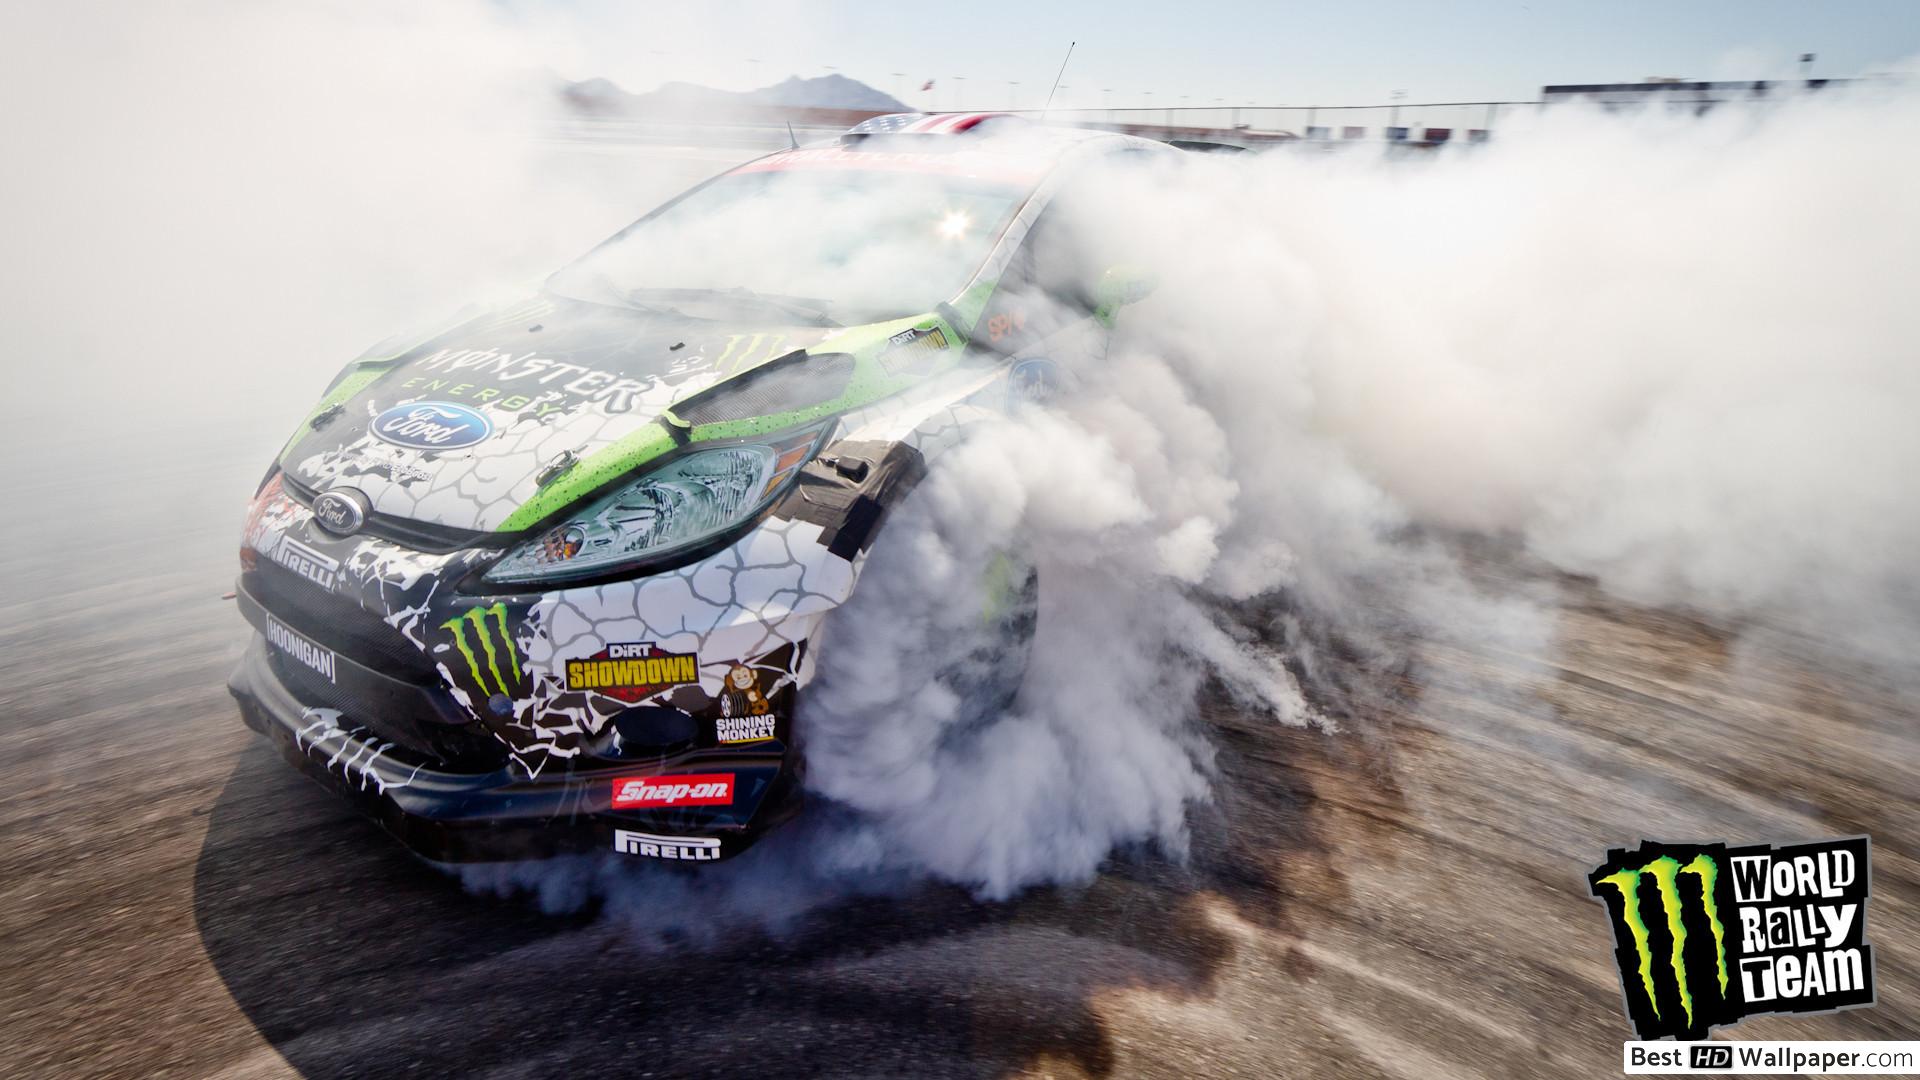 Burnout at World Rally Team Racing HD wallpaper download